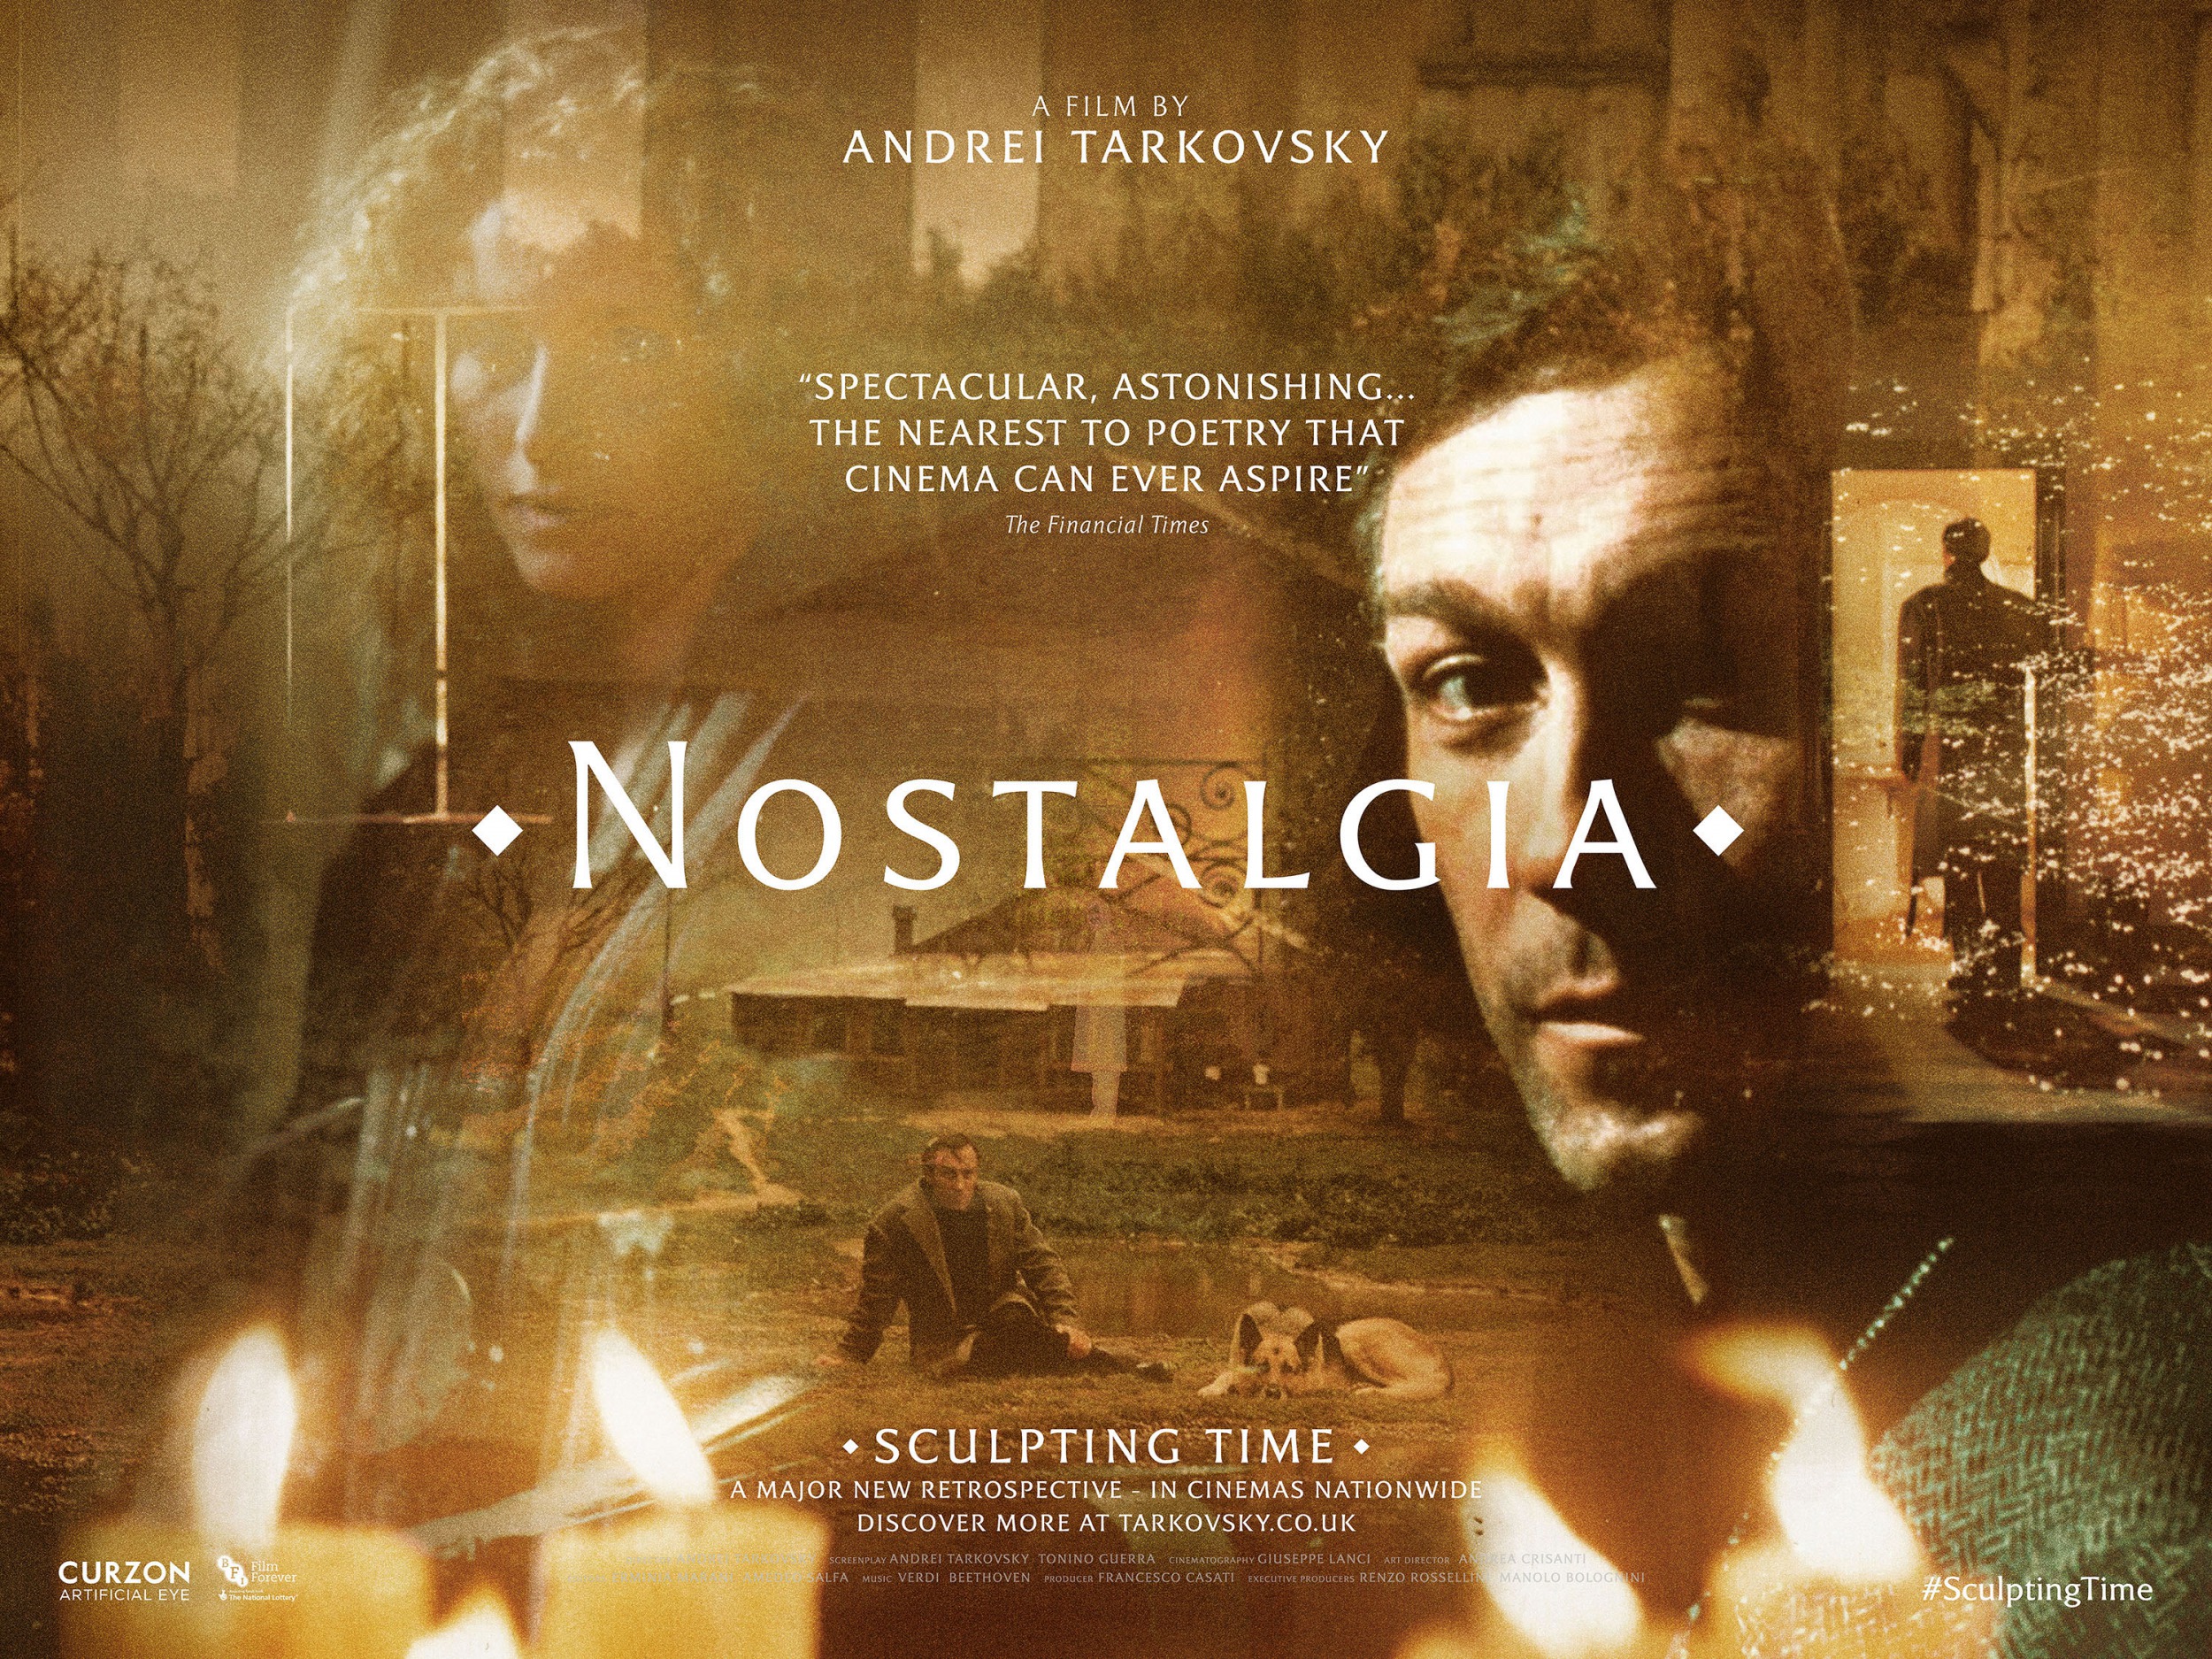 Mega Sized Movie Poster Image for Nostalghia (#3 of 3)